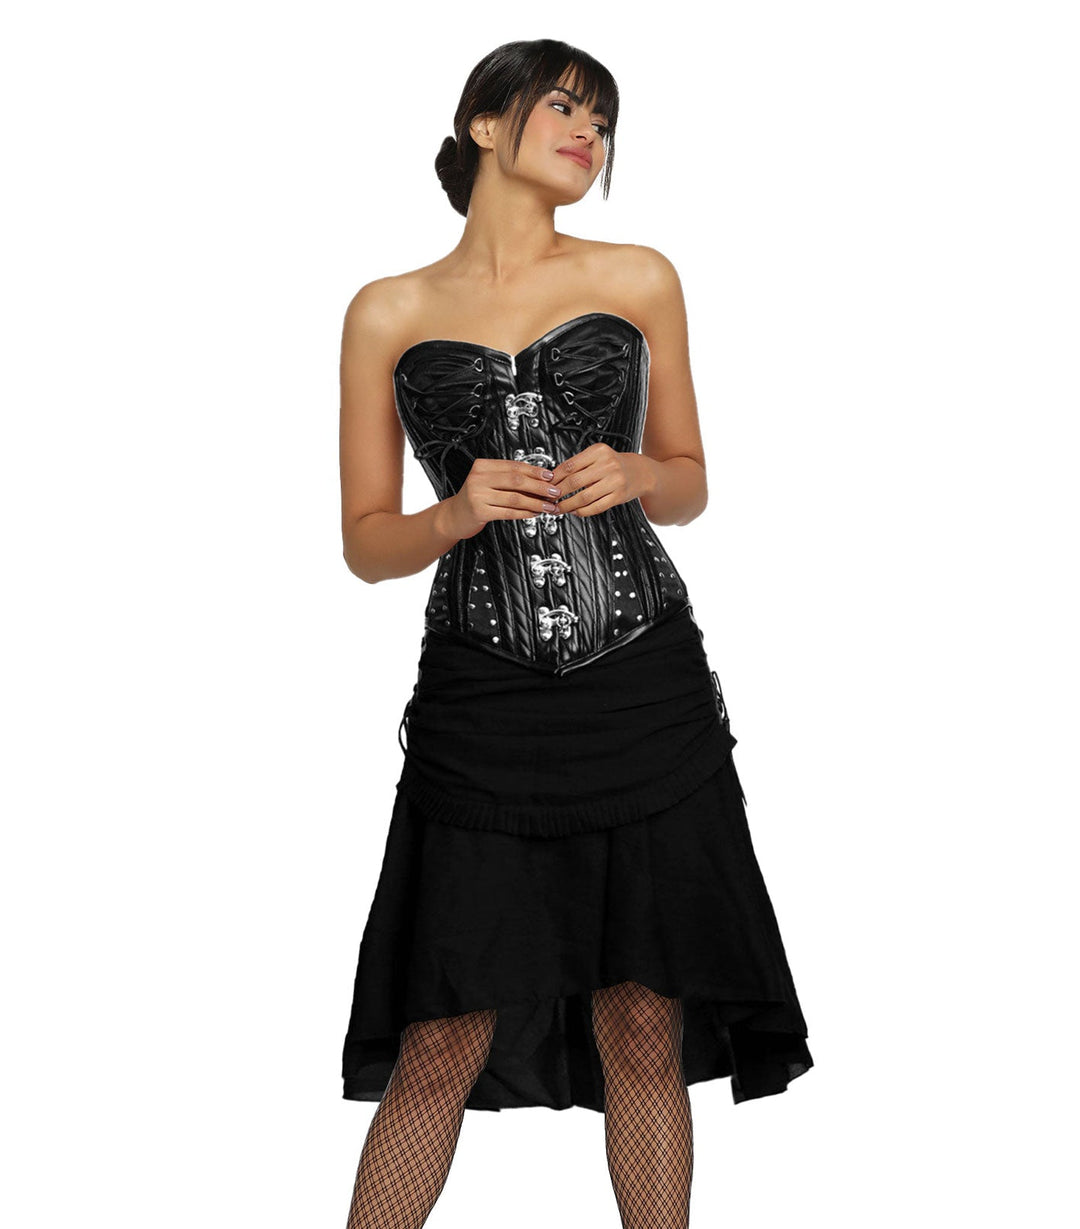 Brock Collection x H&M boned corset top - new – Manifesto Woman